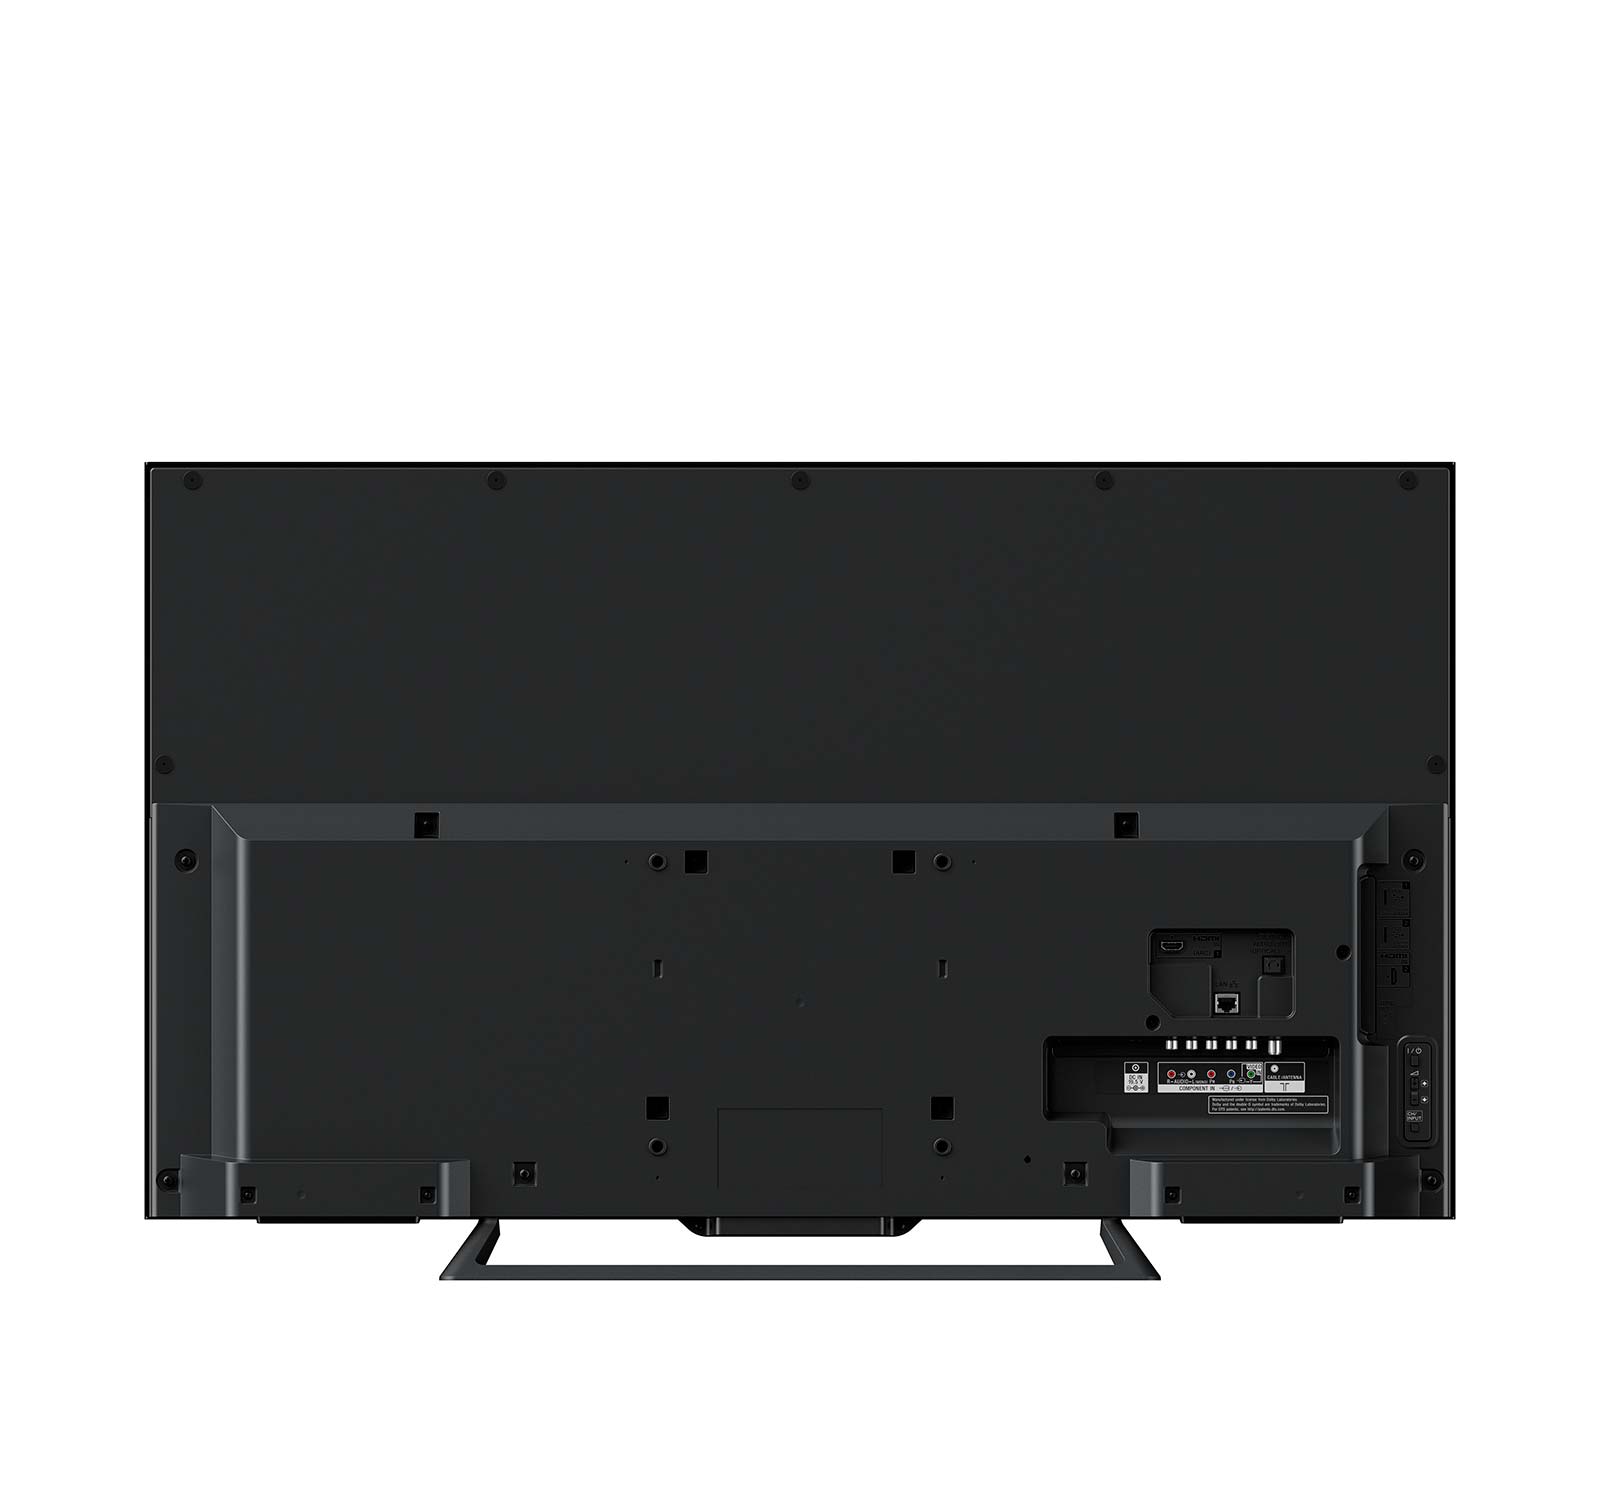 Sony KDL-40R510C - 40" Class - BRAVIA R550C Series LED TV - Smart TV - 1080p (Full HD) 1920 x 1080 - edge-lit, frame dimming - black - image 3 of 4